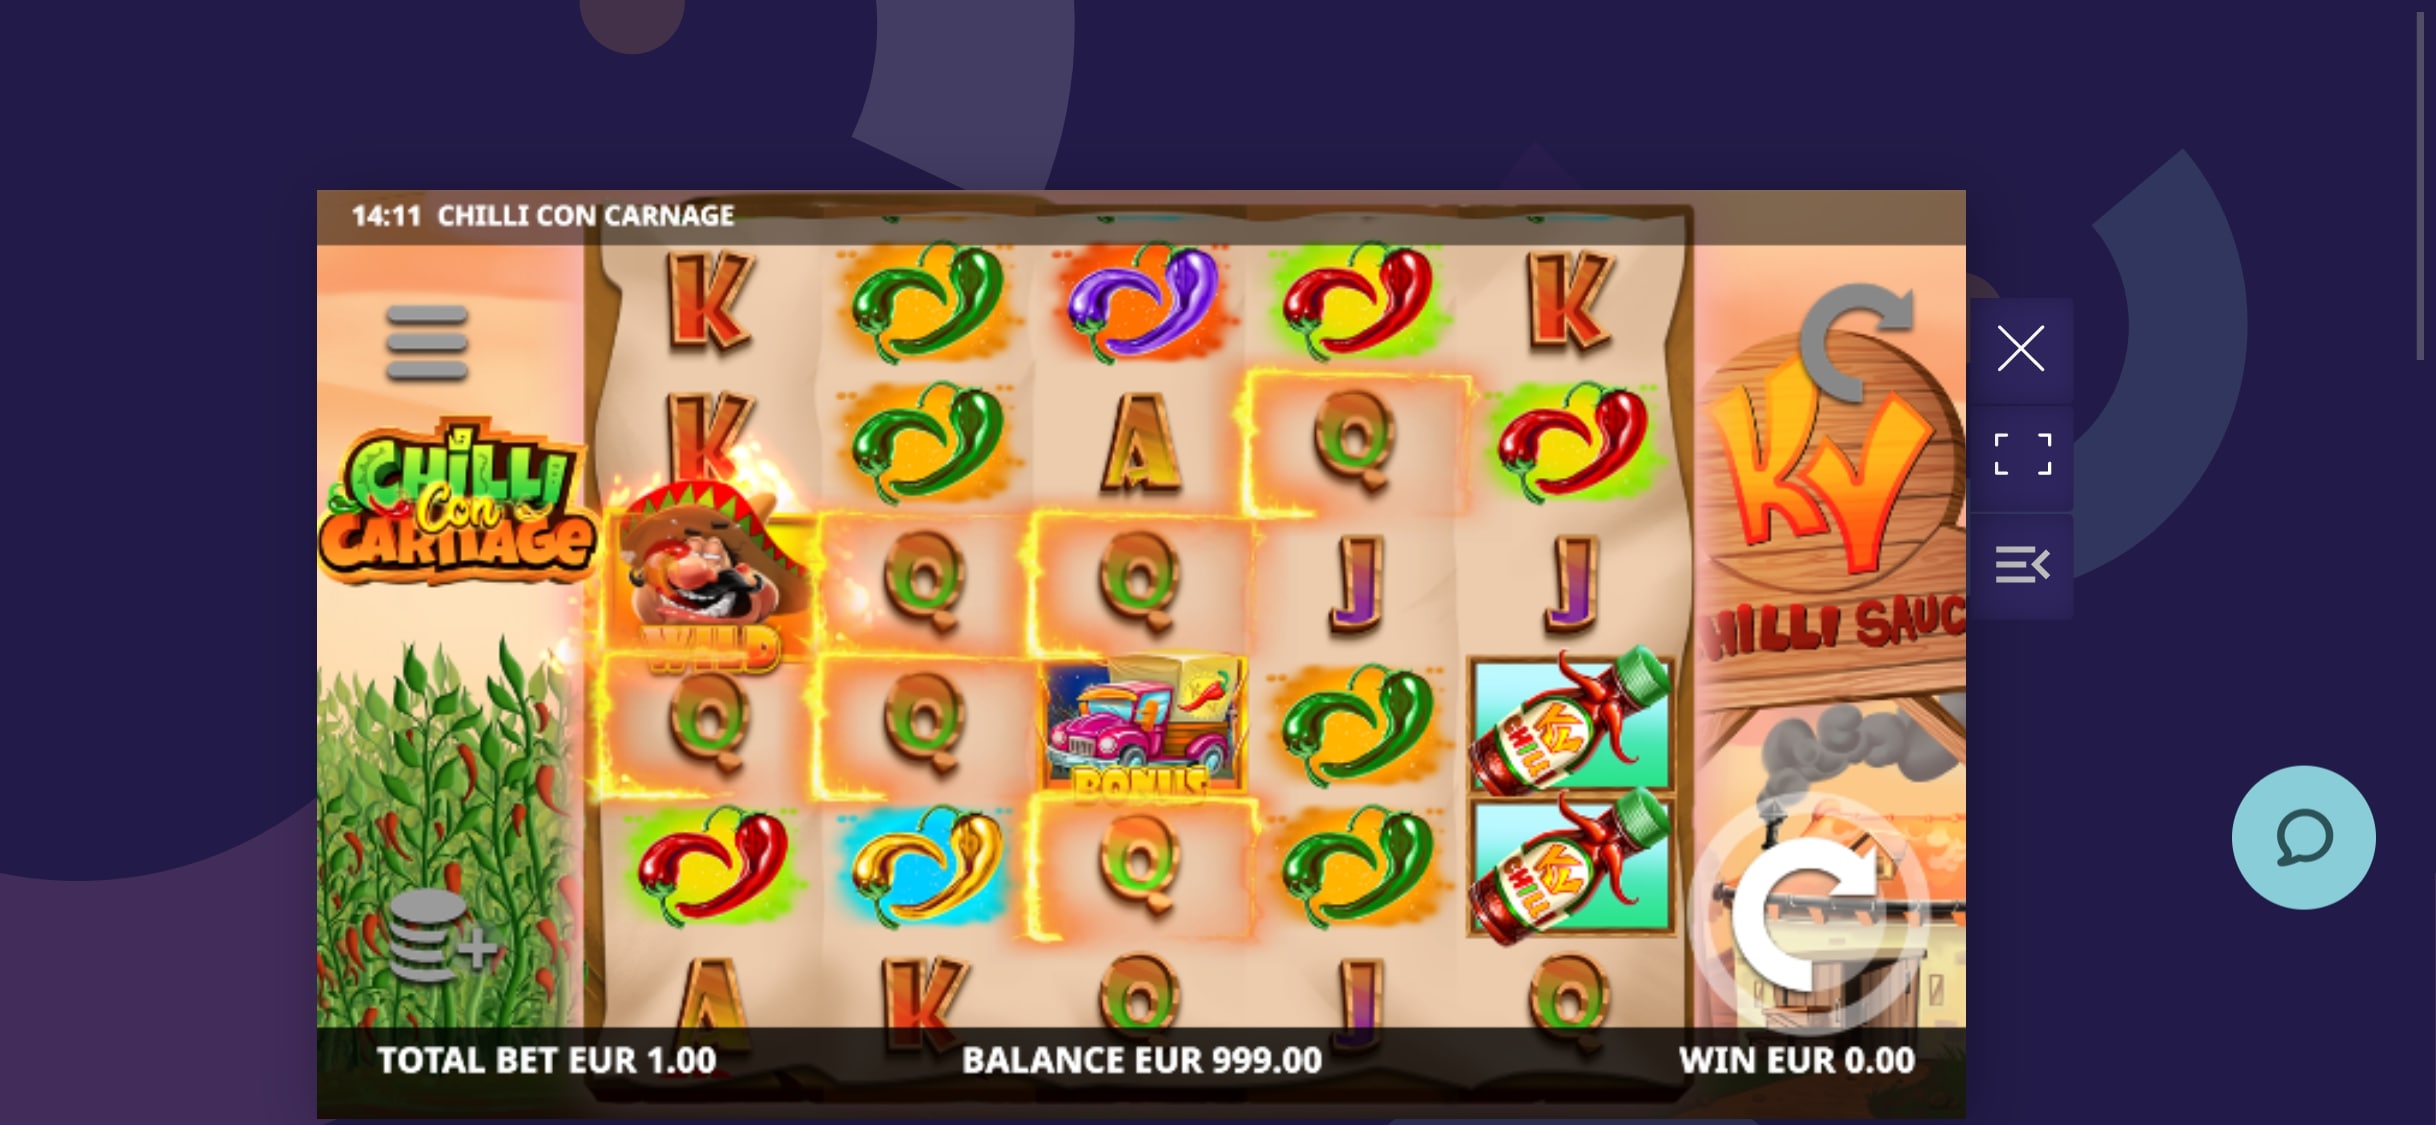 Gambola Casino Mobile Slot Games Review